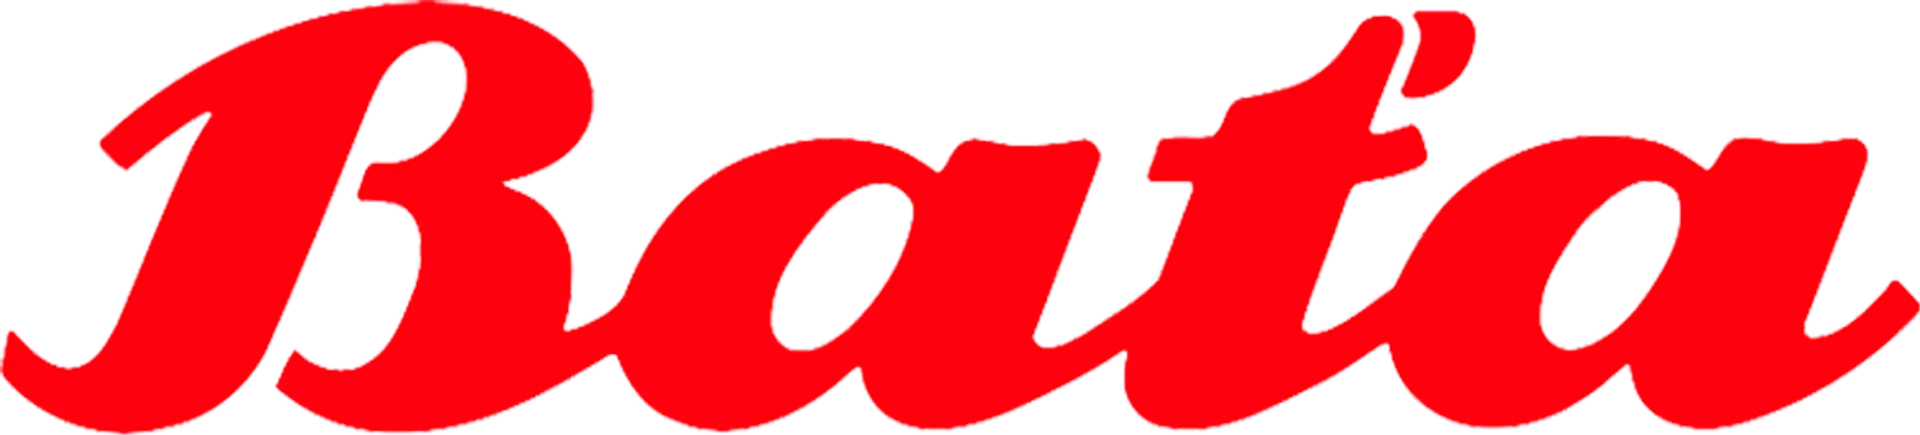 BAŤA logo of current flyer